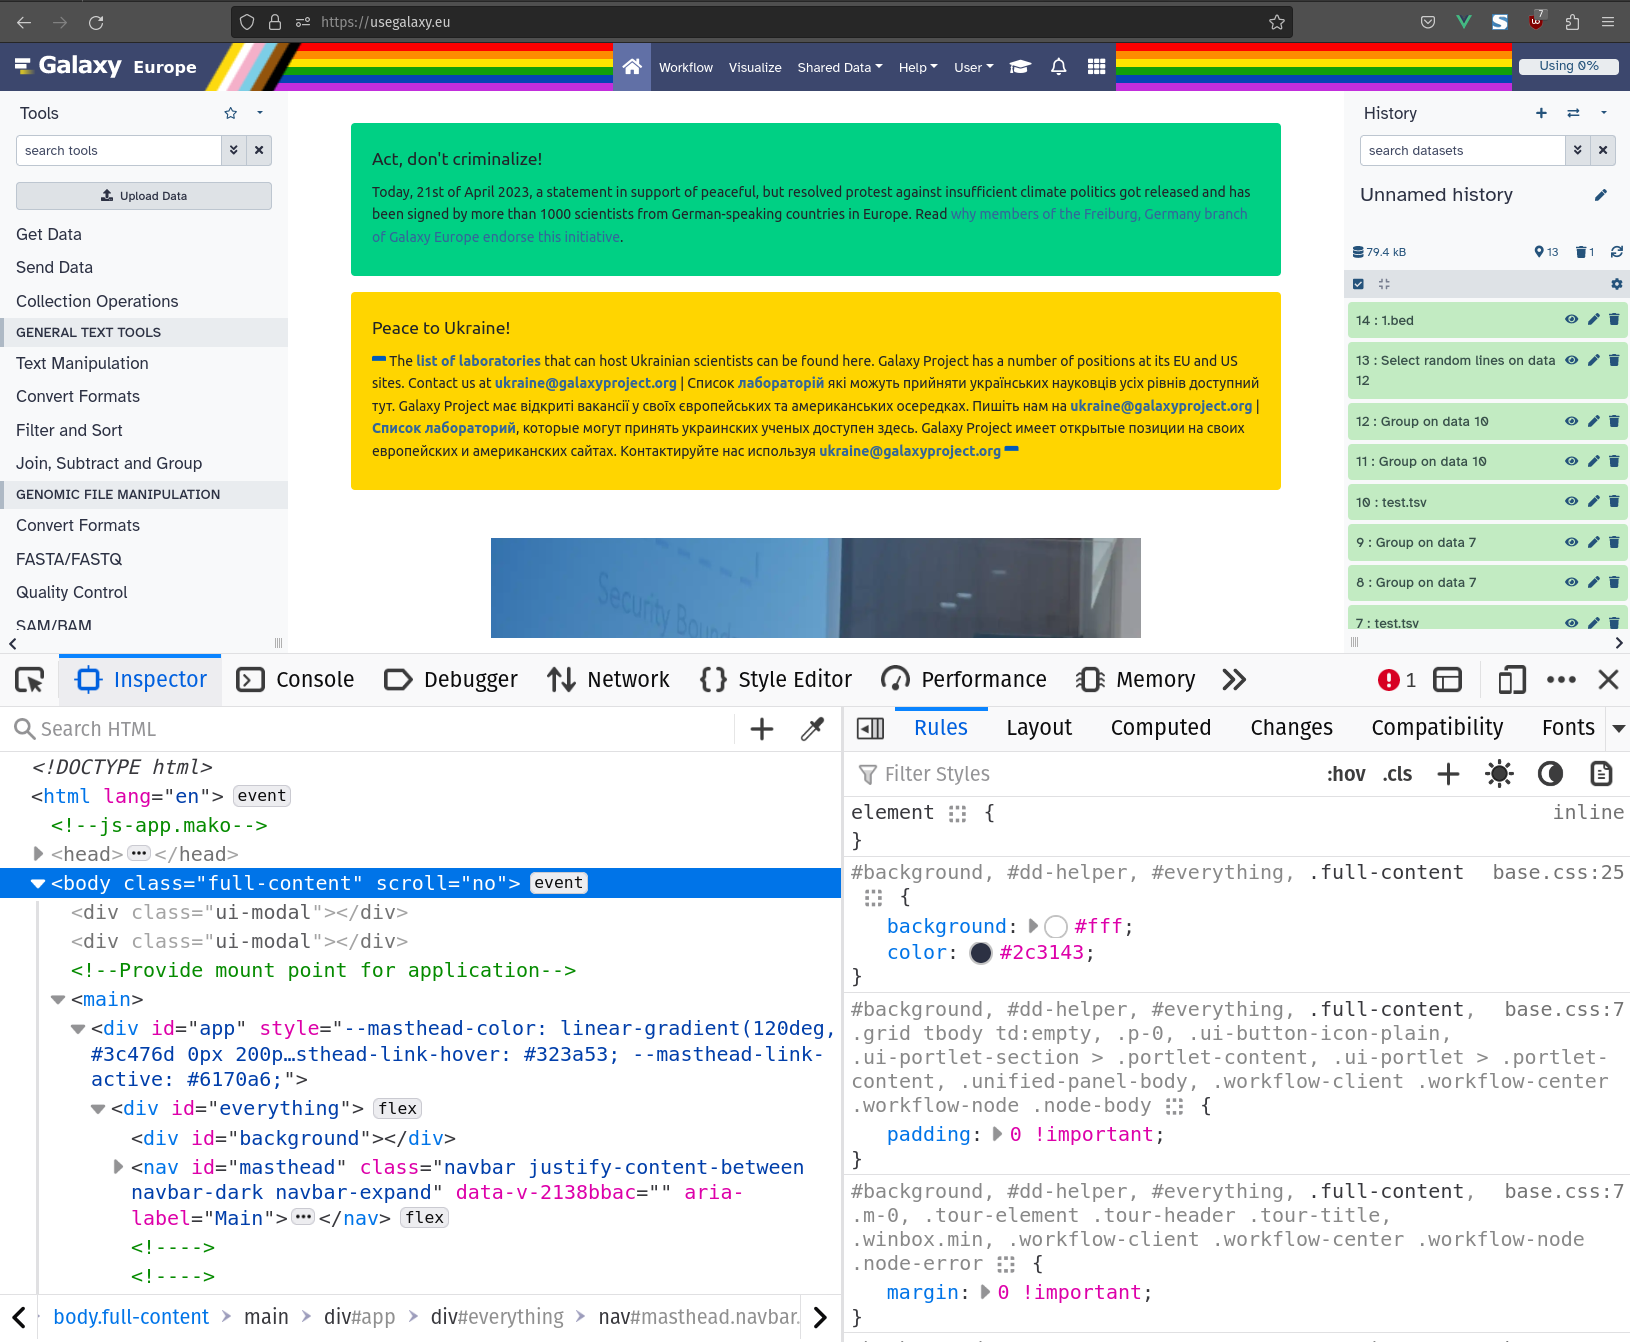 Screenshot of Firefox dev tools open on usegalaxy.eu